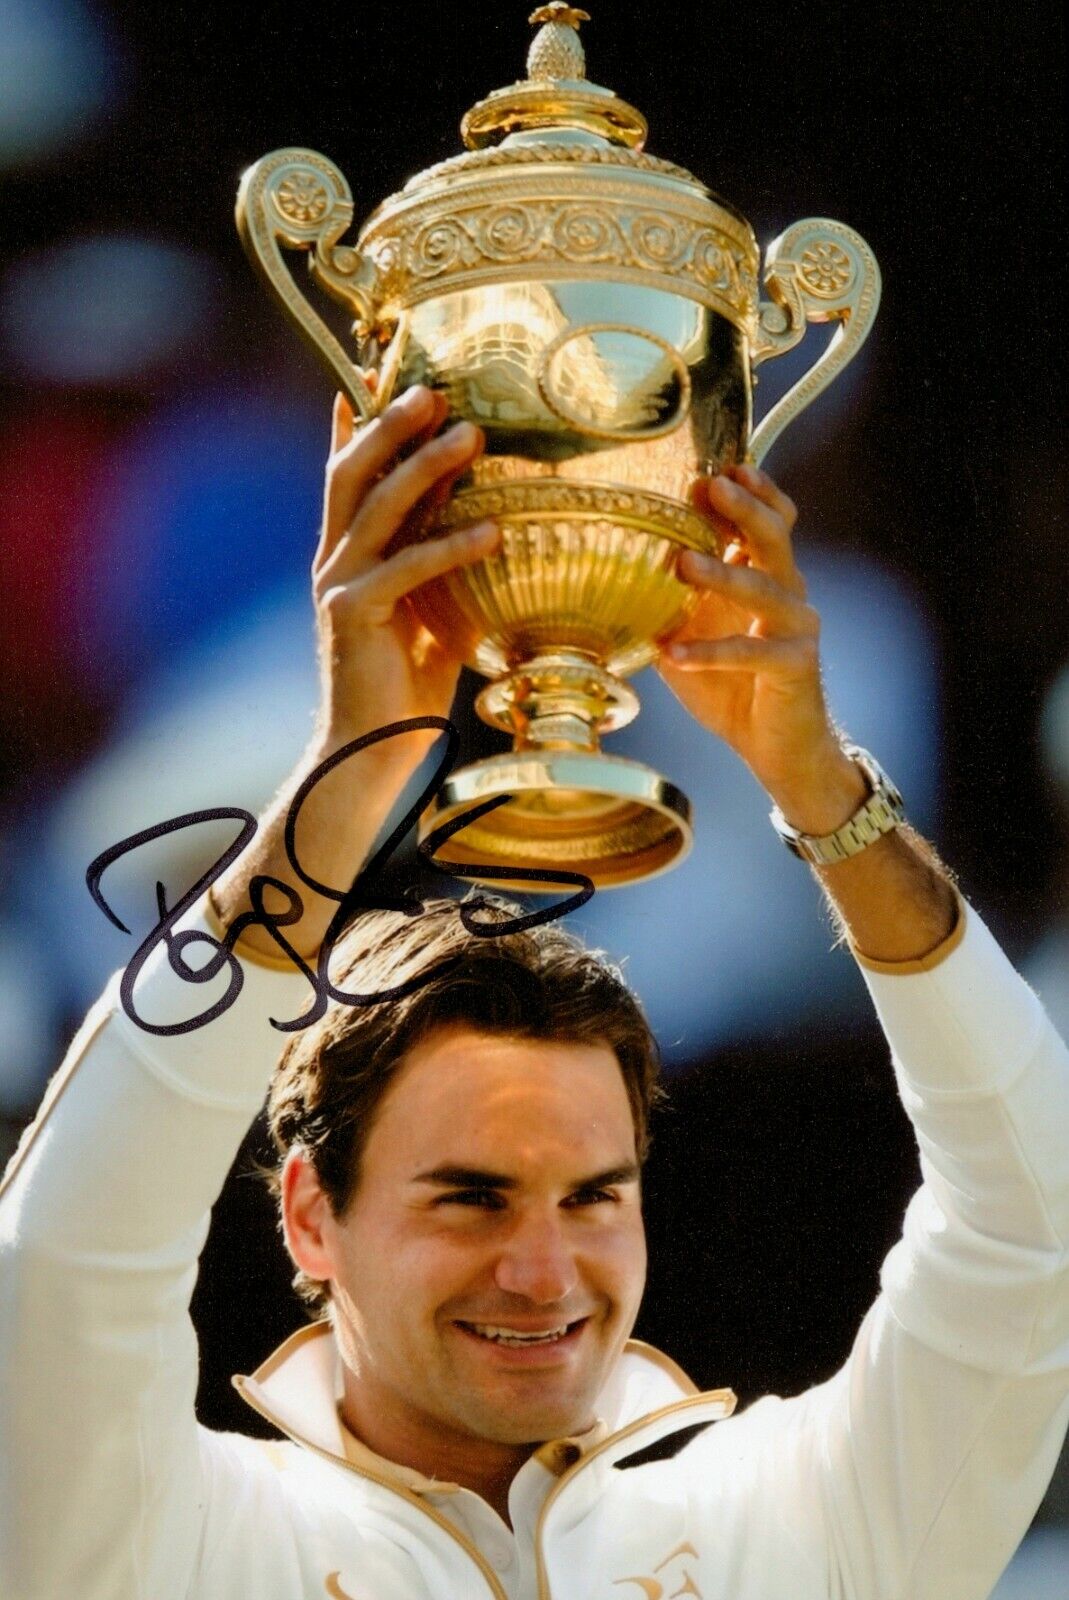 Roger Federer Signed 6x4 Photo Poster painting ATP Champion Grand Slam Wimbledon Autograph + COA